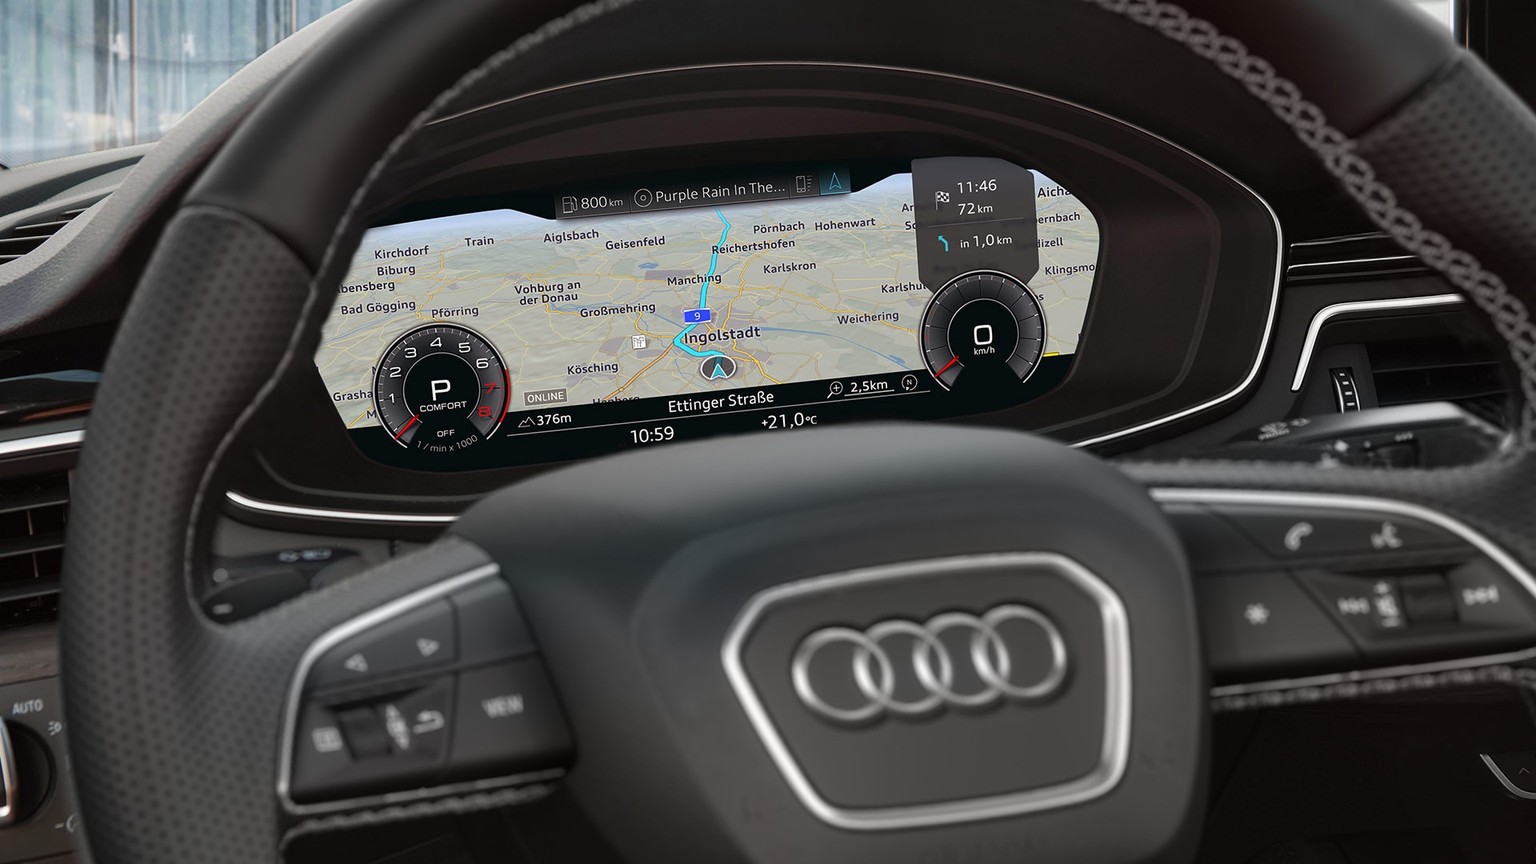 Audi A5 Cabriolet tachometer - Audi Australia